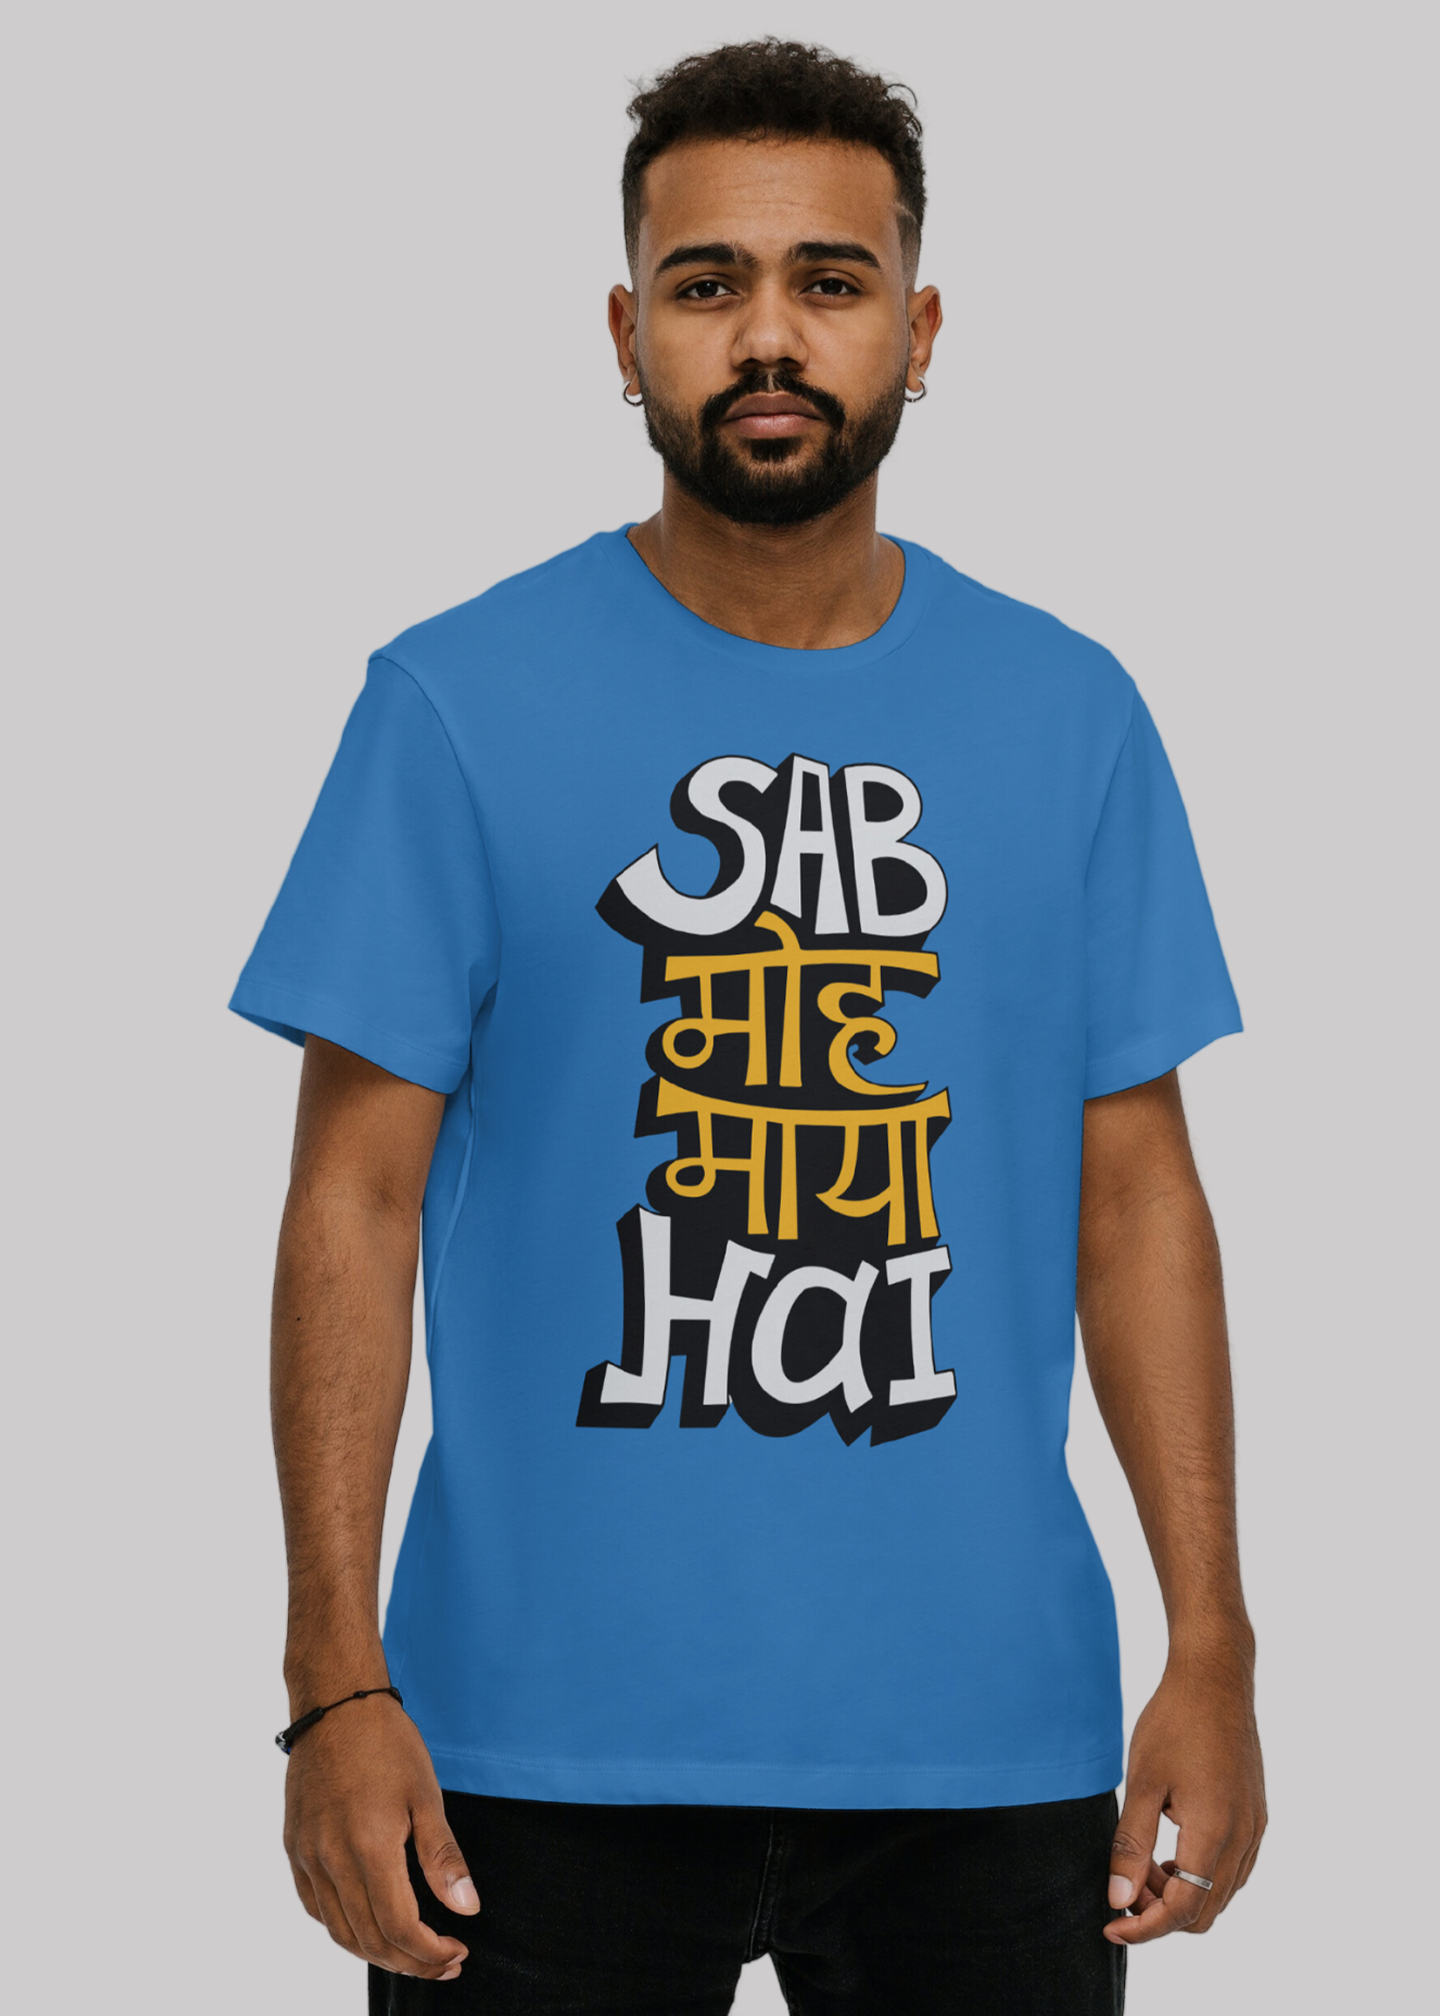 Saab moho maya hai Printed Half Sleeve Premium Cotton T-shirt For Men